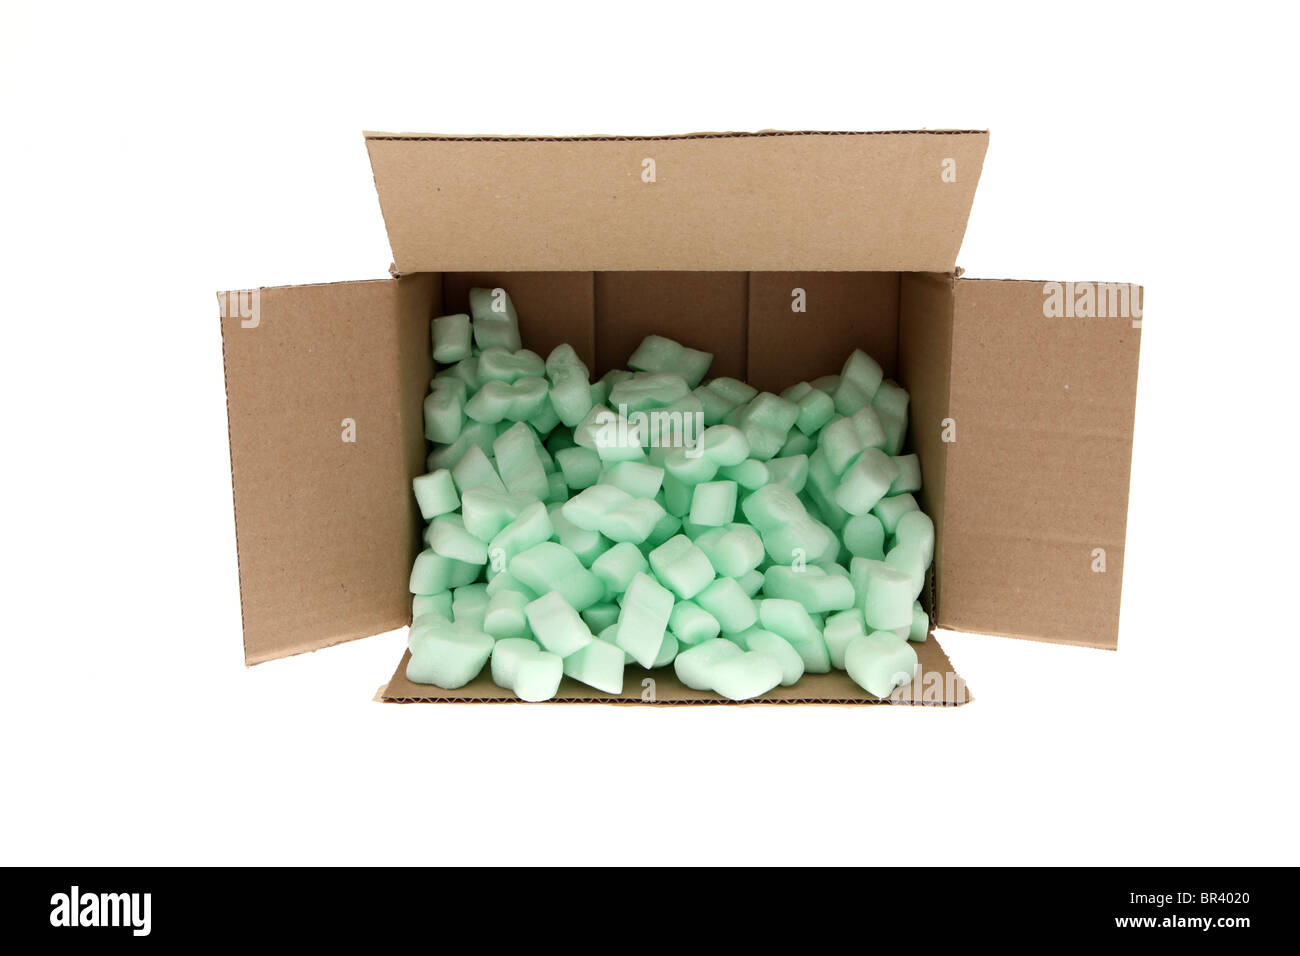 Brauner Karton mit grünen Polystyrol Verpackung Erdnüsse Stockfoto